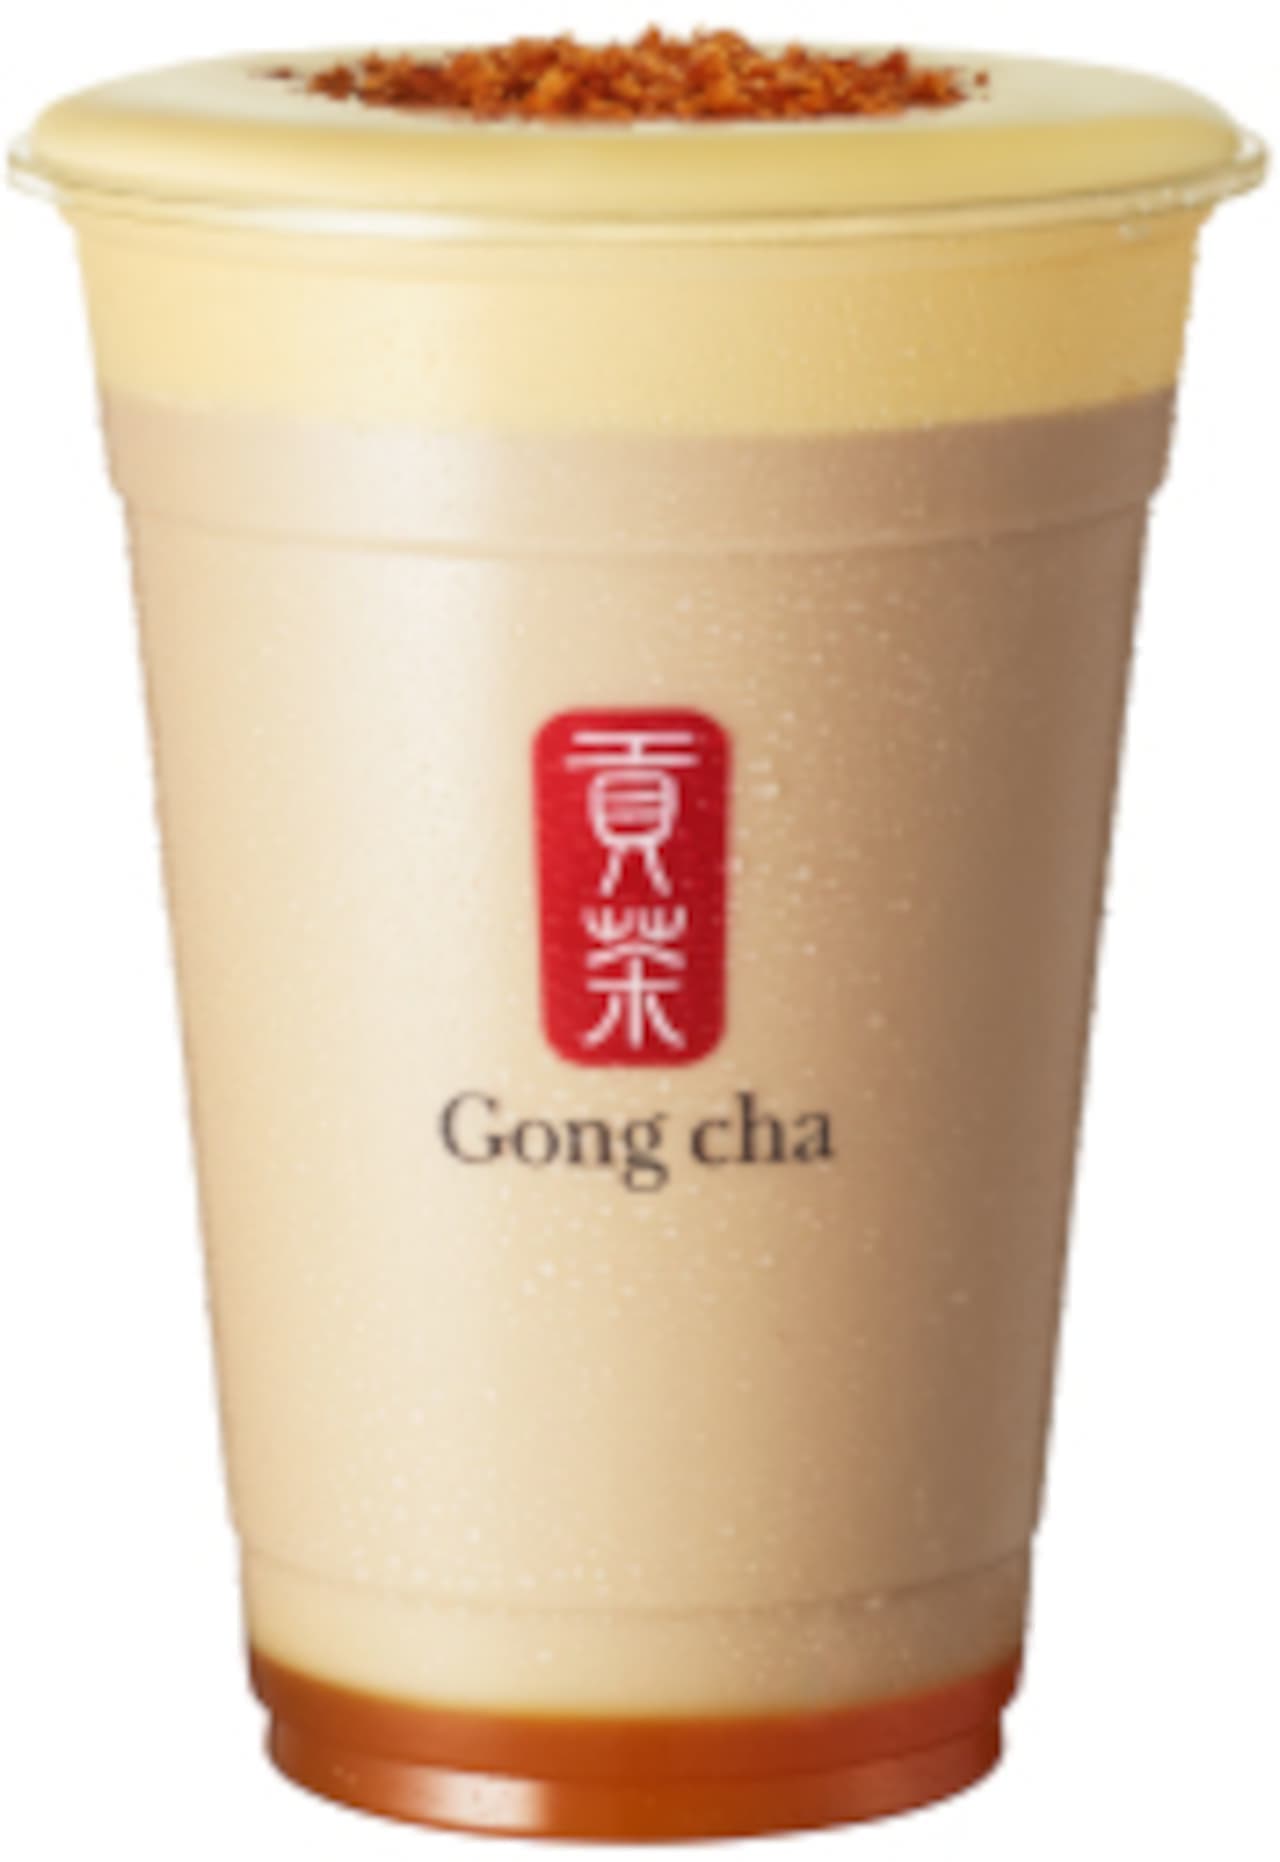 Gong Cha seasonal milk tea